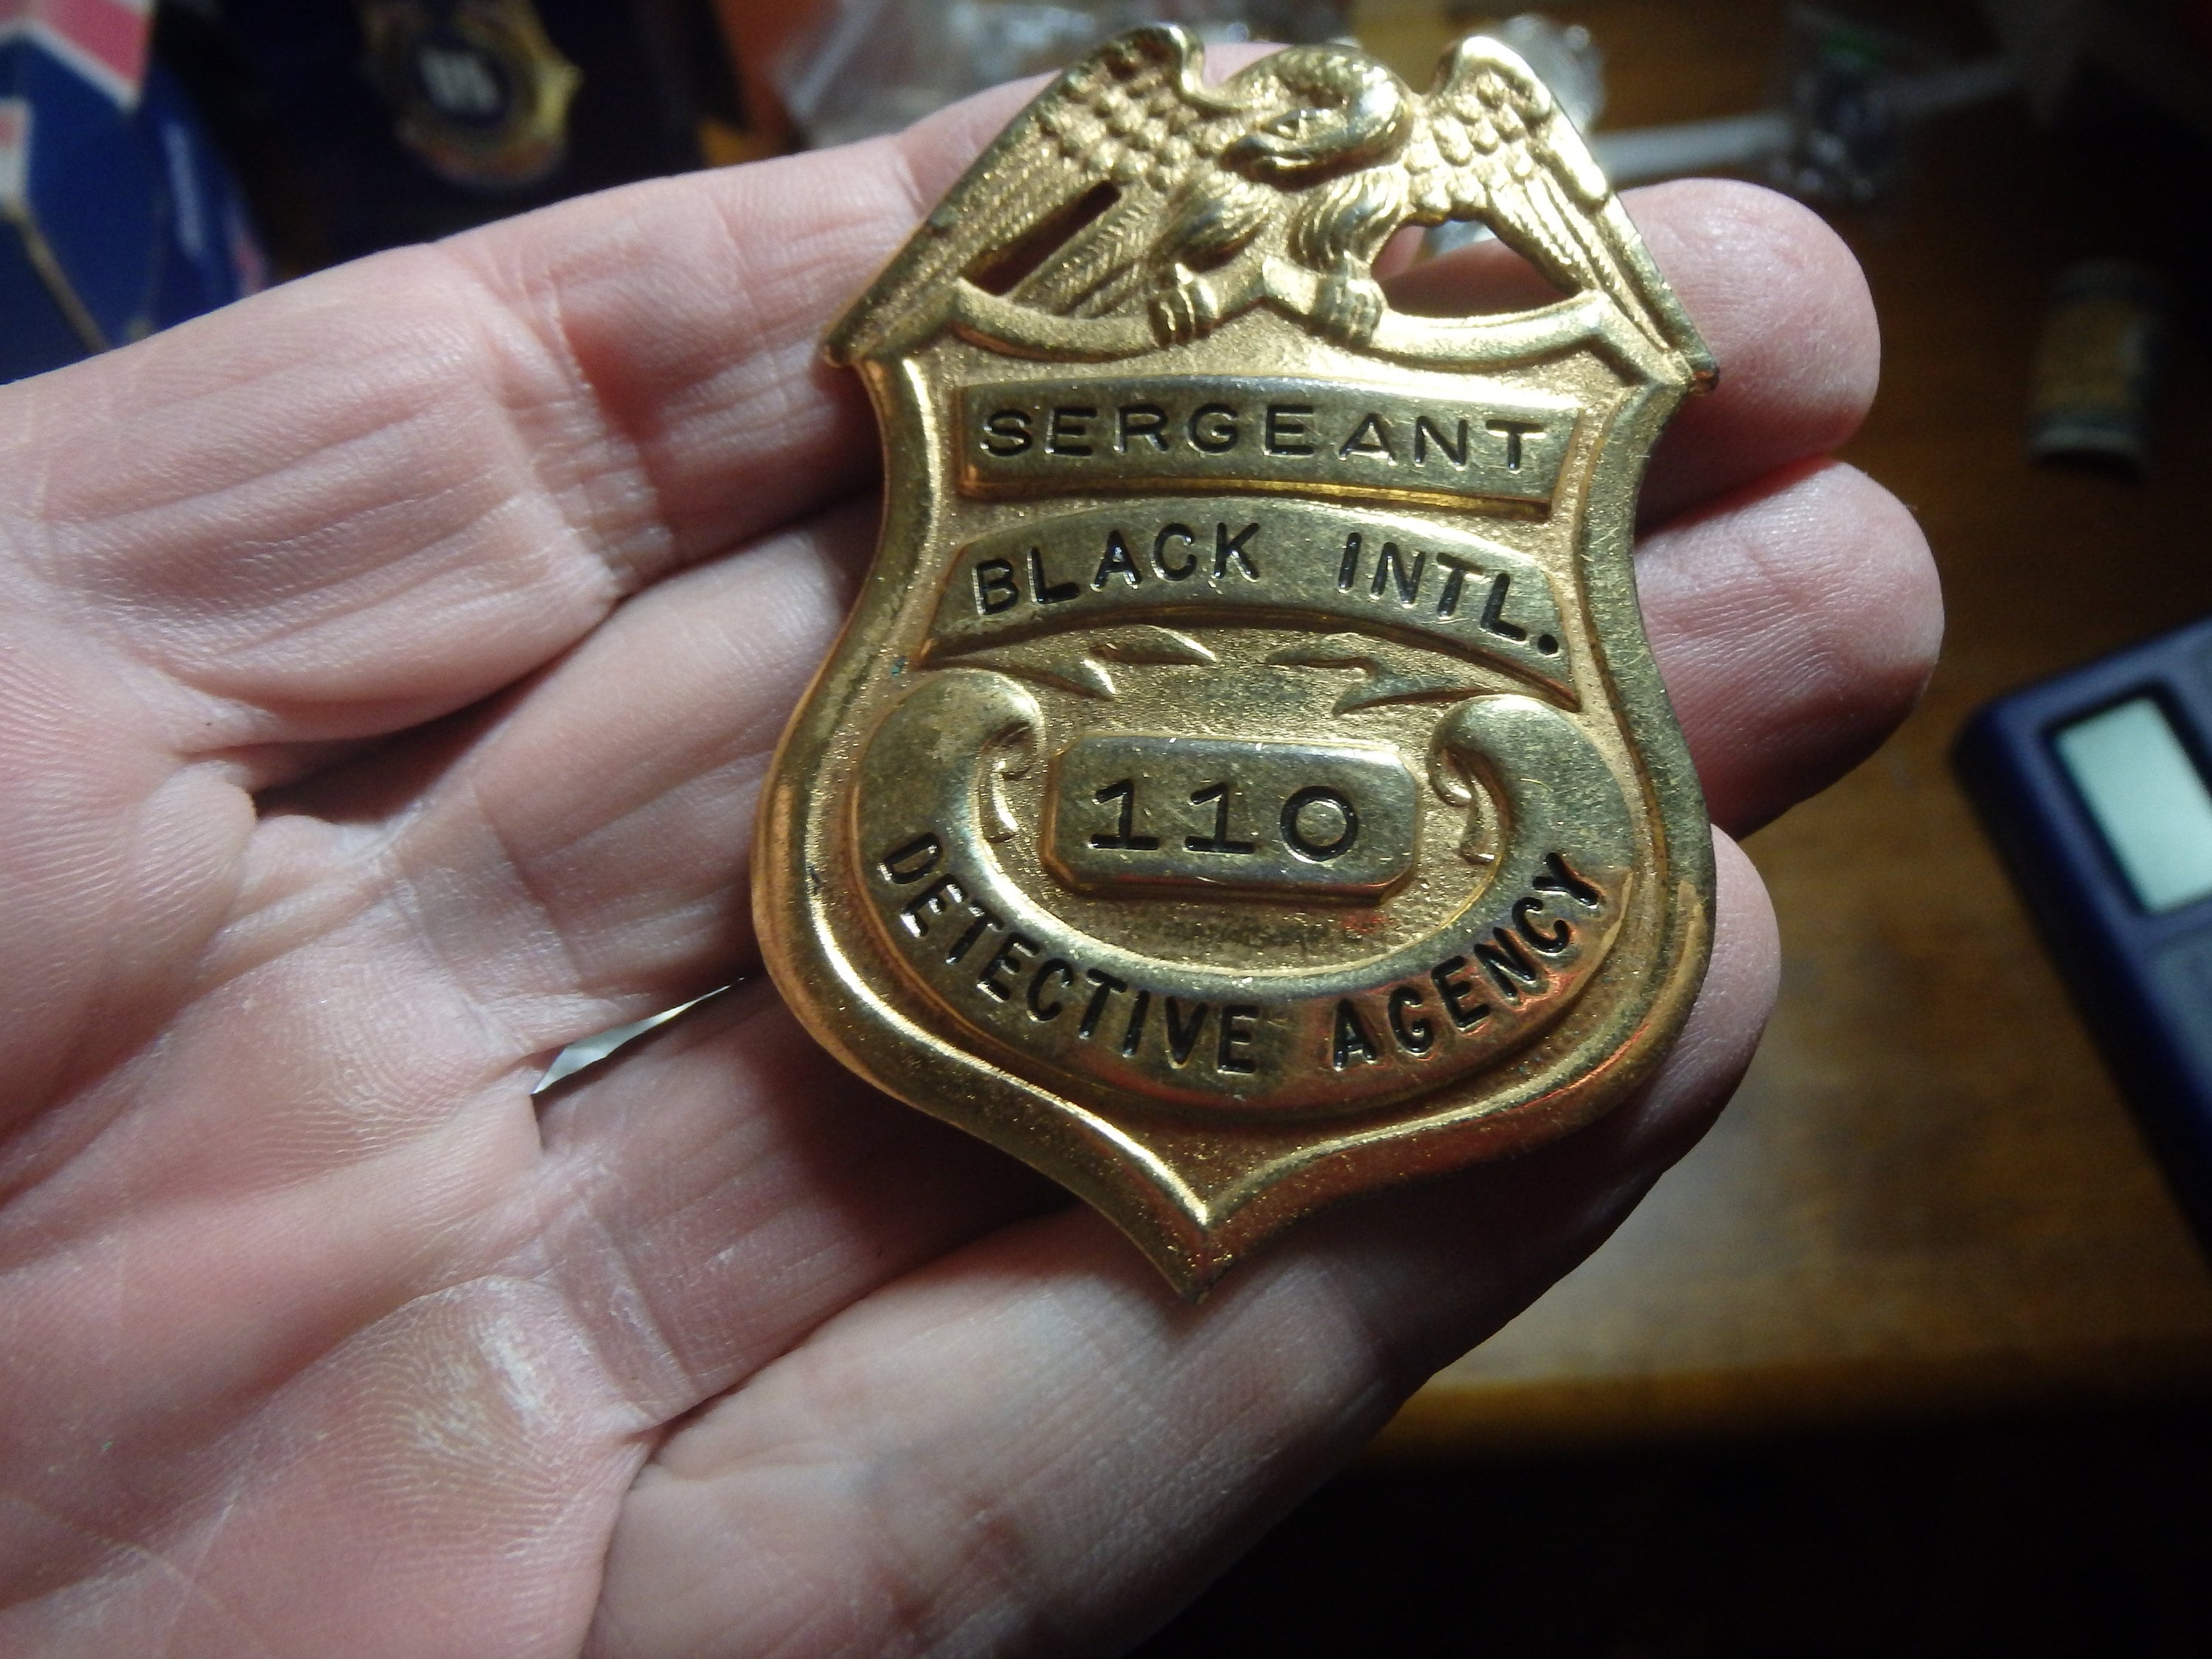 Black International Detective Badge Sergeant Rank Security - Etsy Canada